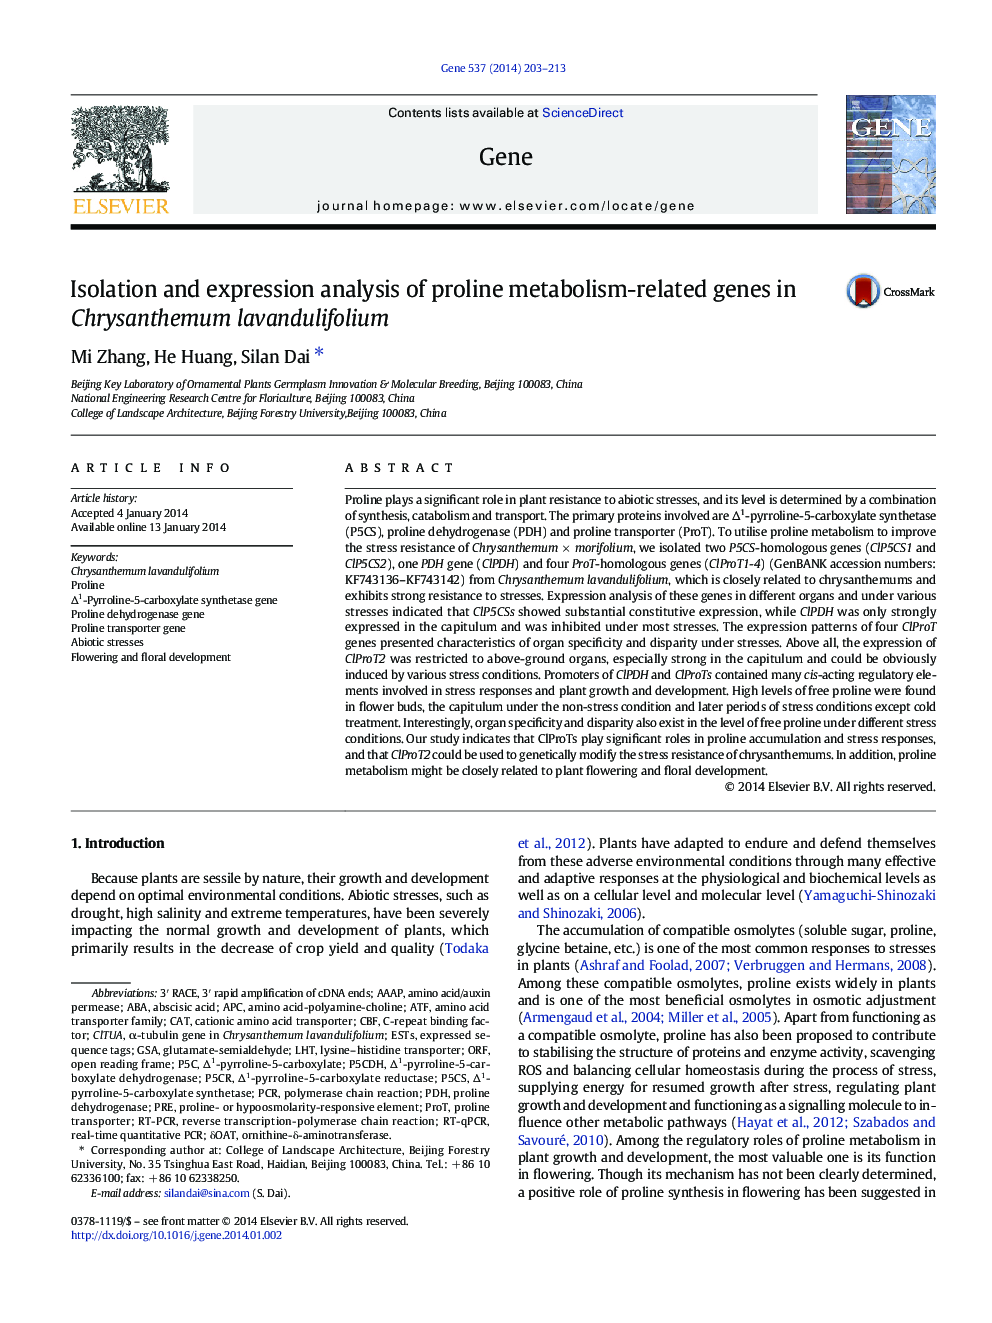 Isolation and expression analysis of proline metabolism-related genes in Chrysanthemum lavandulifolium